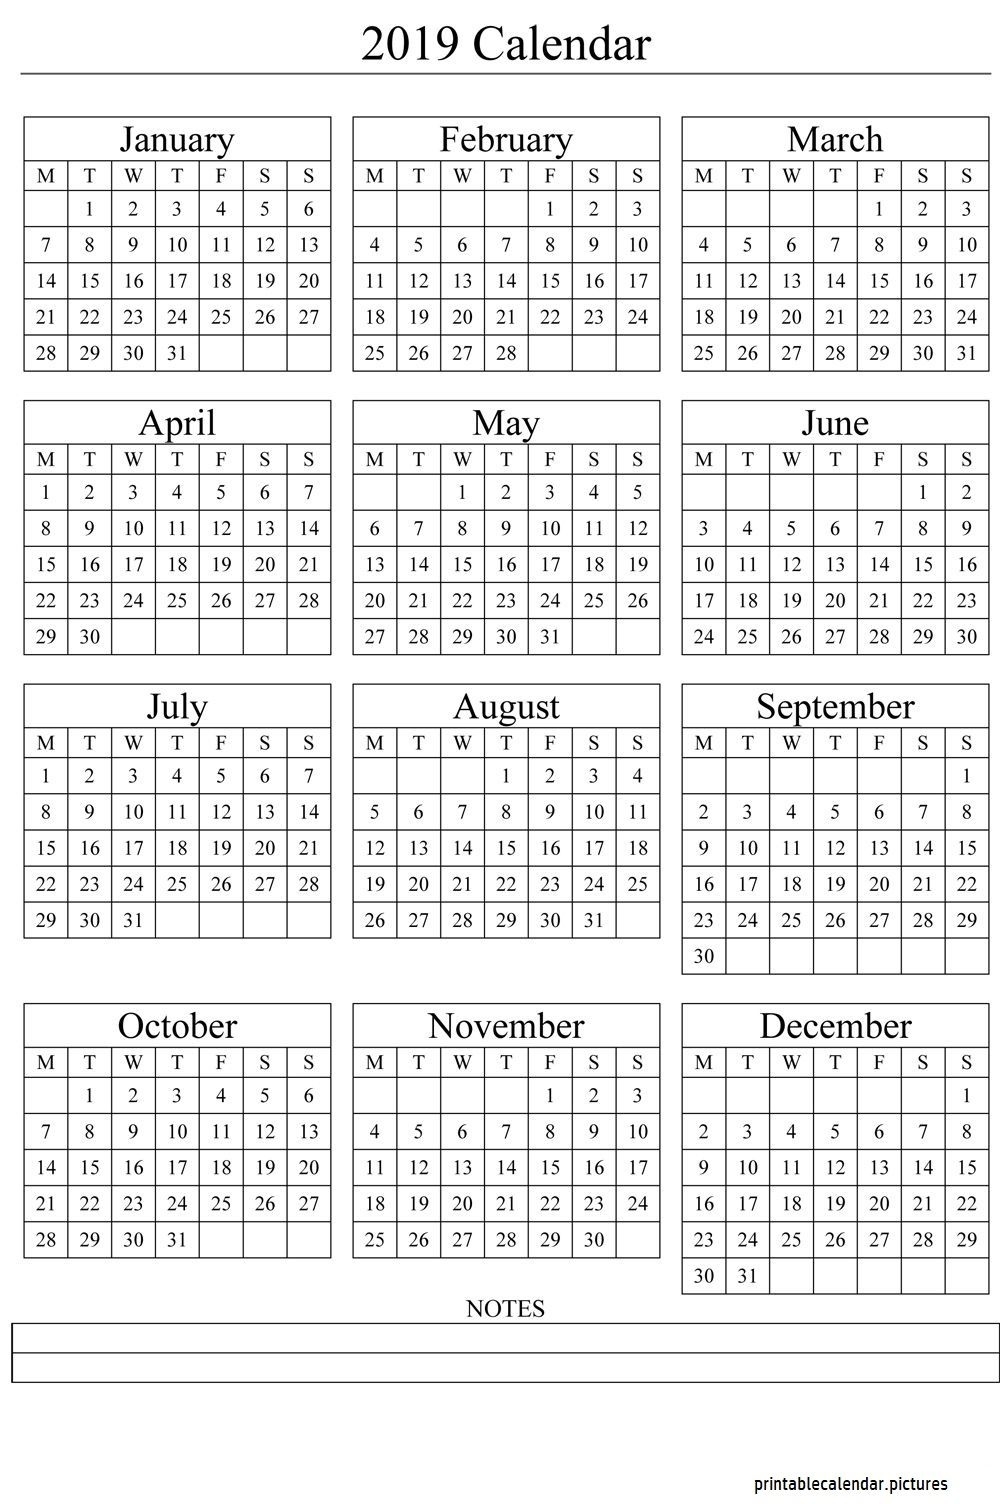 Calendar Template 2019 | Calendar Template 2019 | Calendar, 2019 4 Year Calendar Template